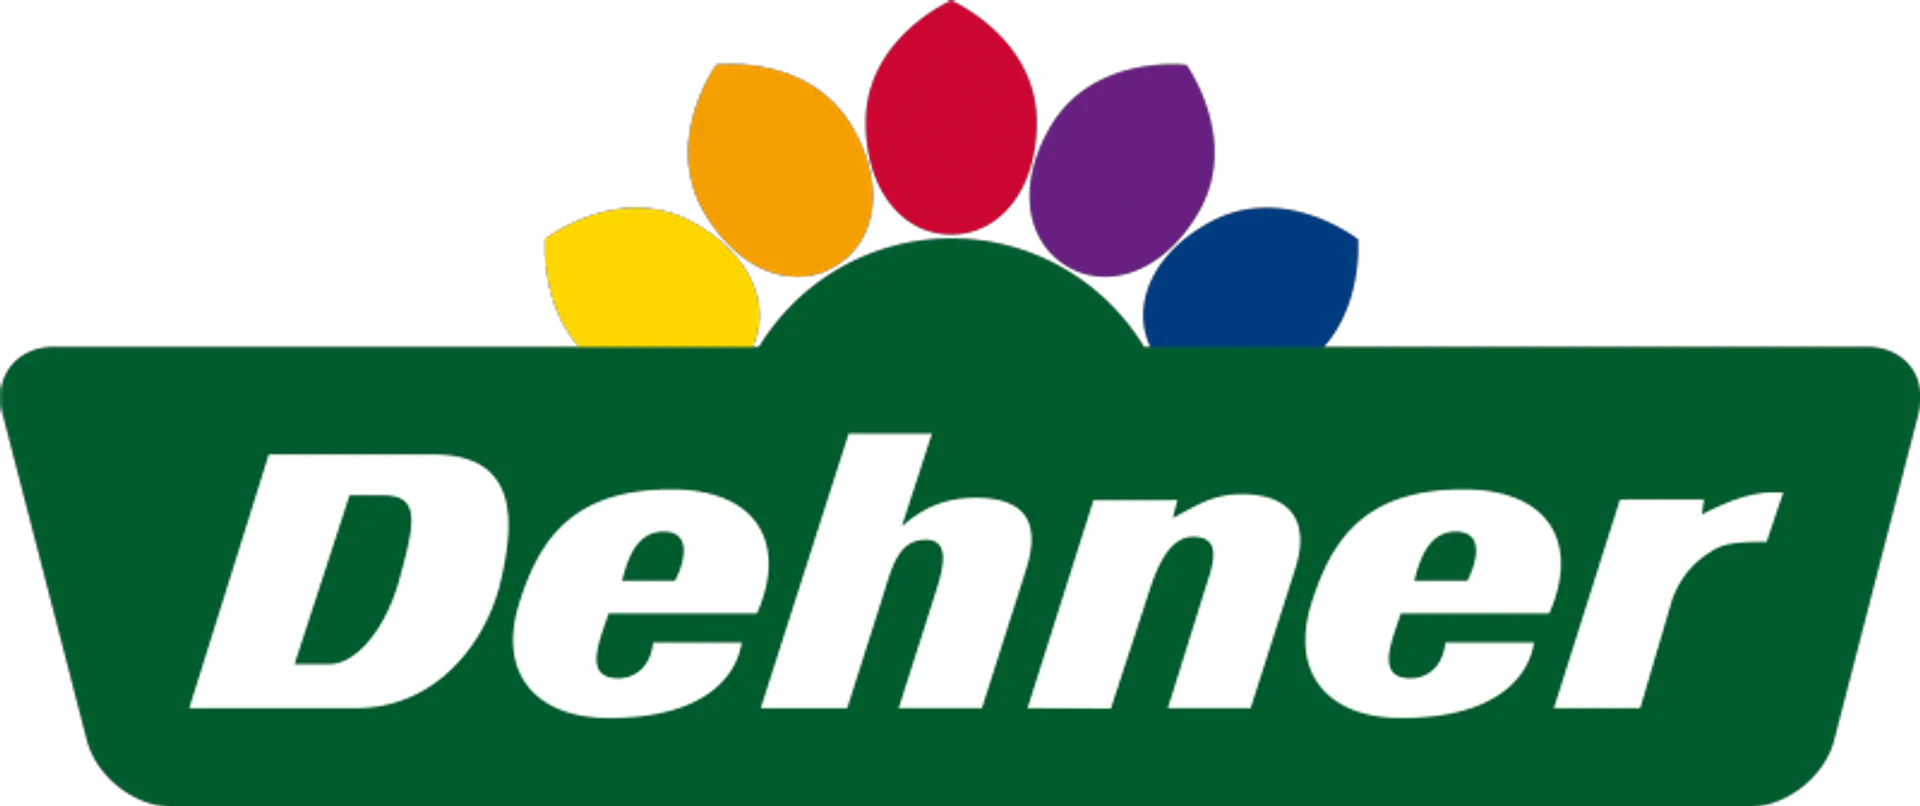 DEHNER logo